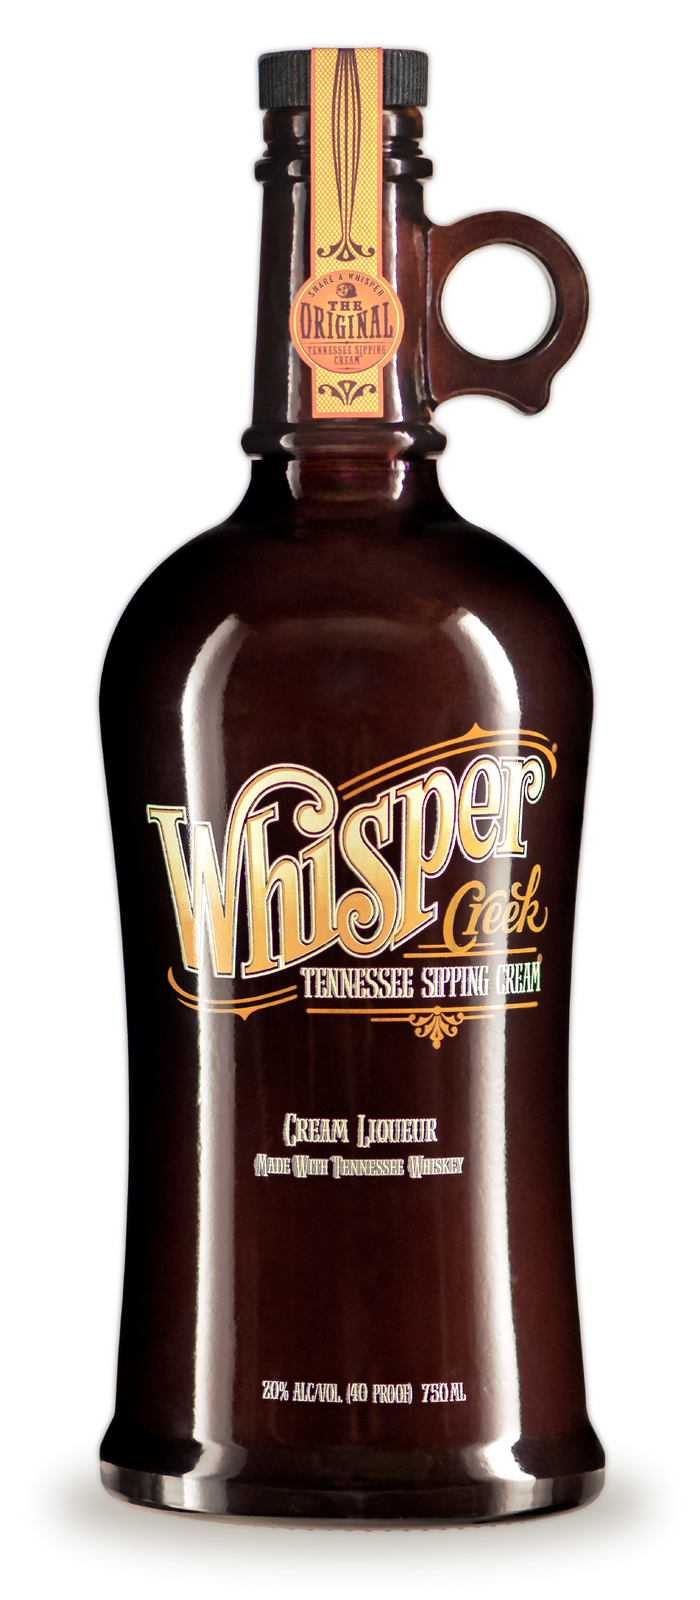 Whisper Creek Tennessee Sipping Cream Liqueur